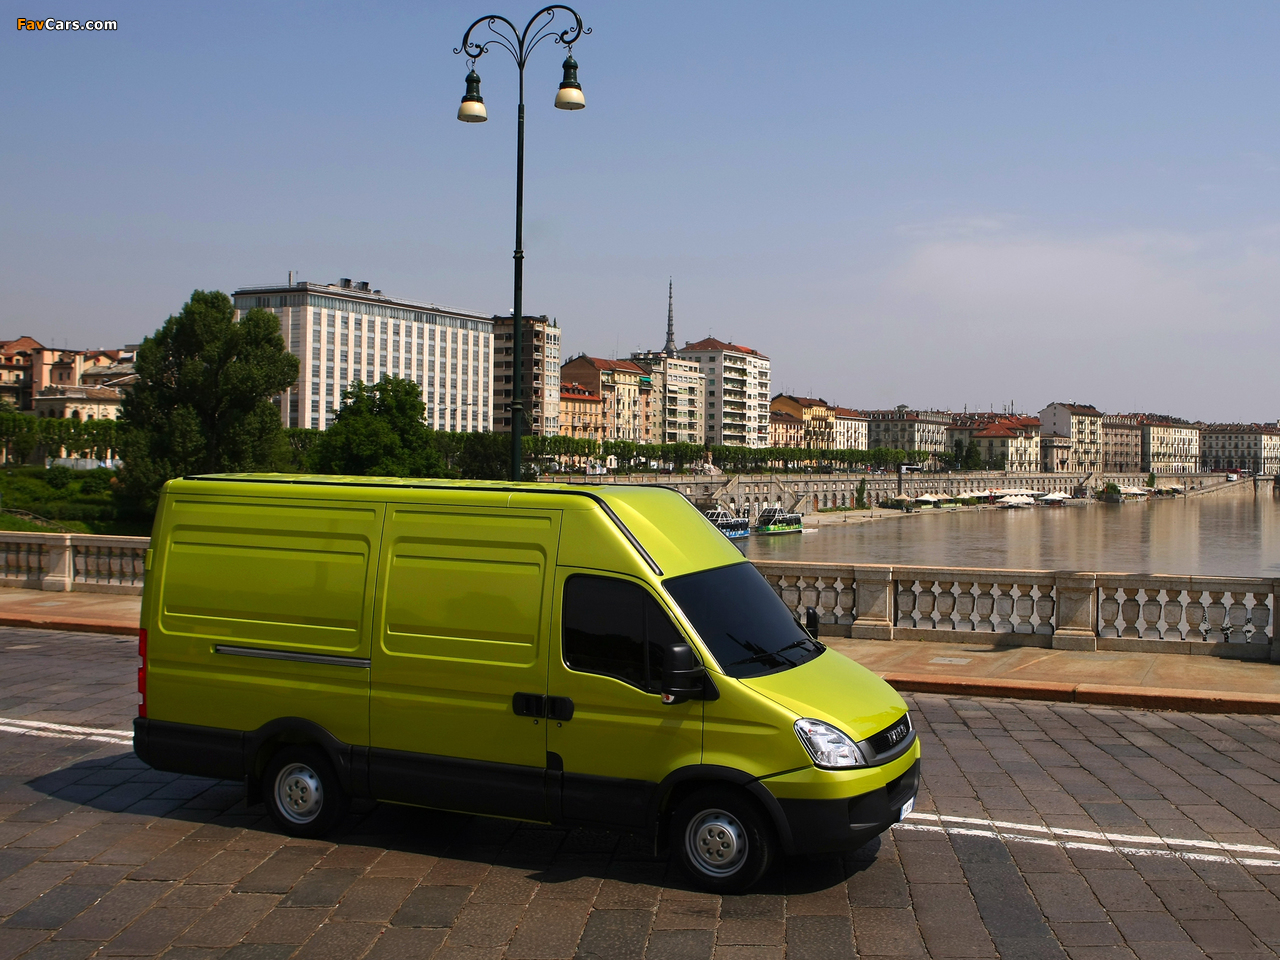 Pictures of Iveco EcoDaily Van 2009–11 (1280 x 960)